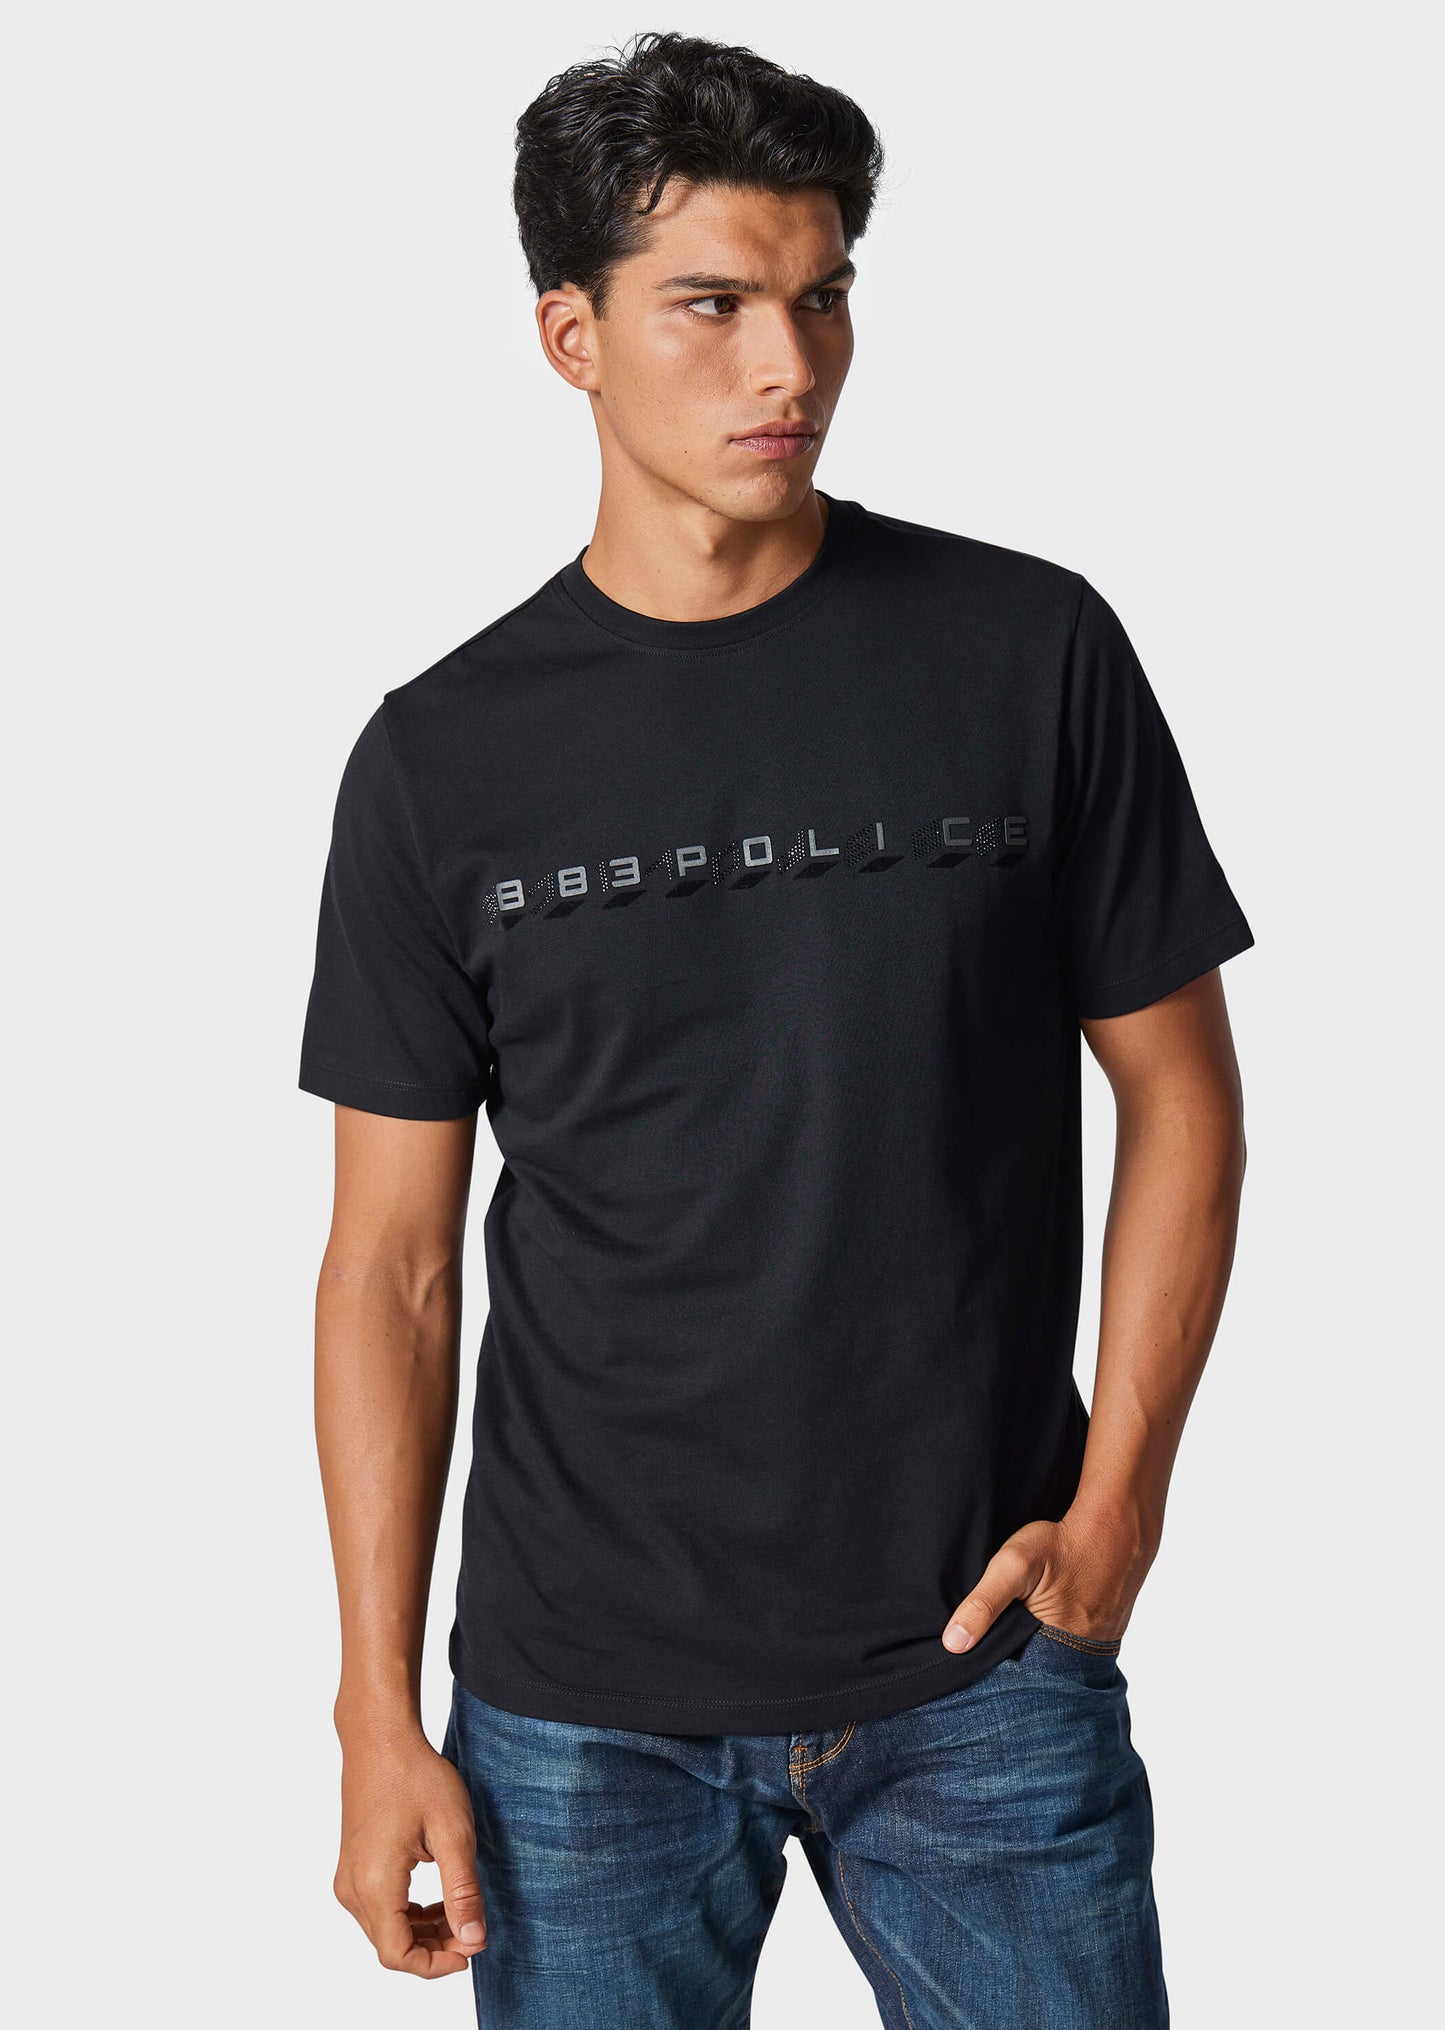 Emerson Black T-Shirt